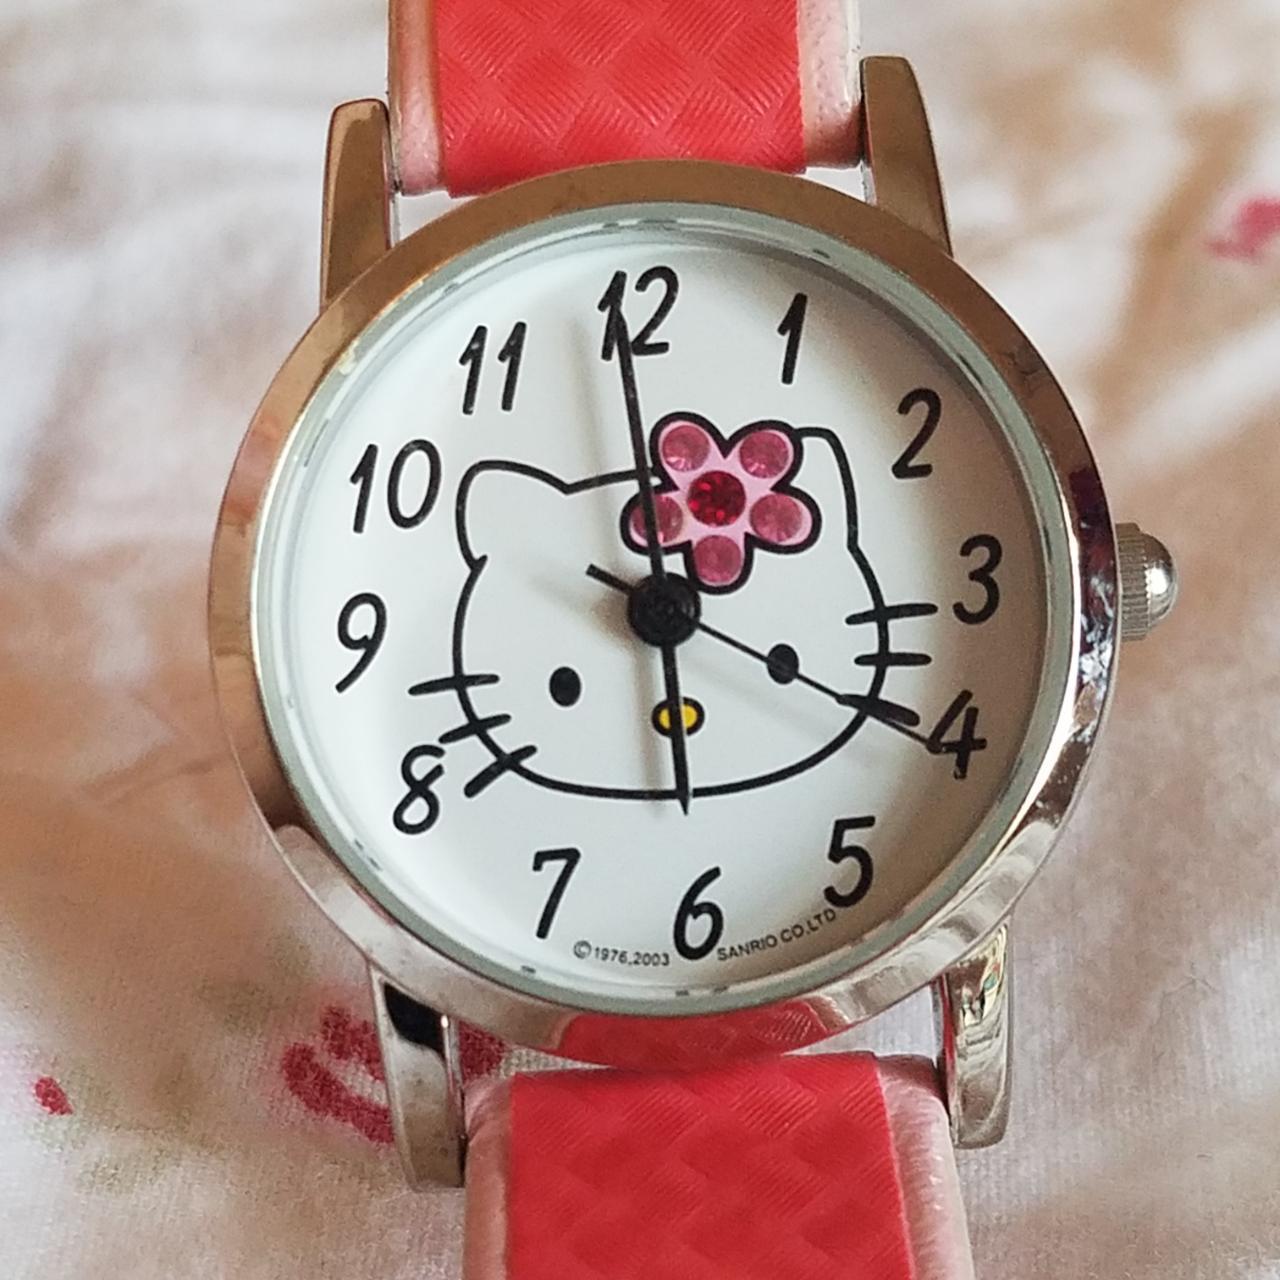 Introducing the Romain Jerome RJ x Hello Kitty Watch | SJX Watches